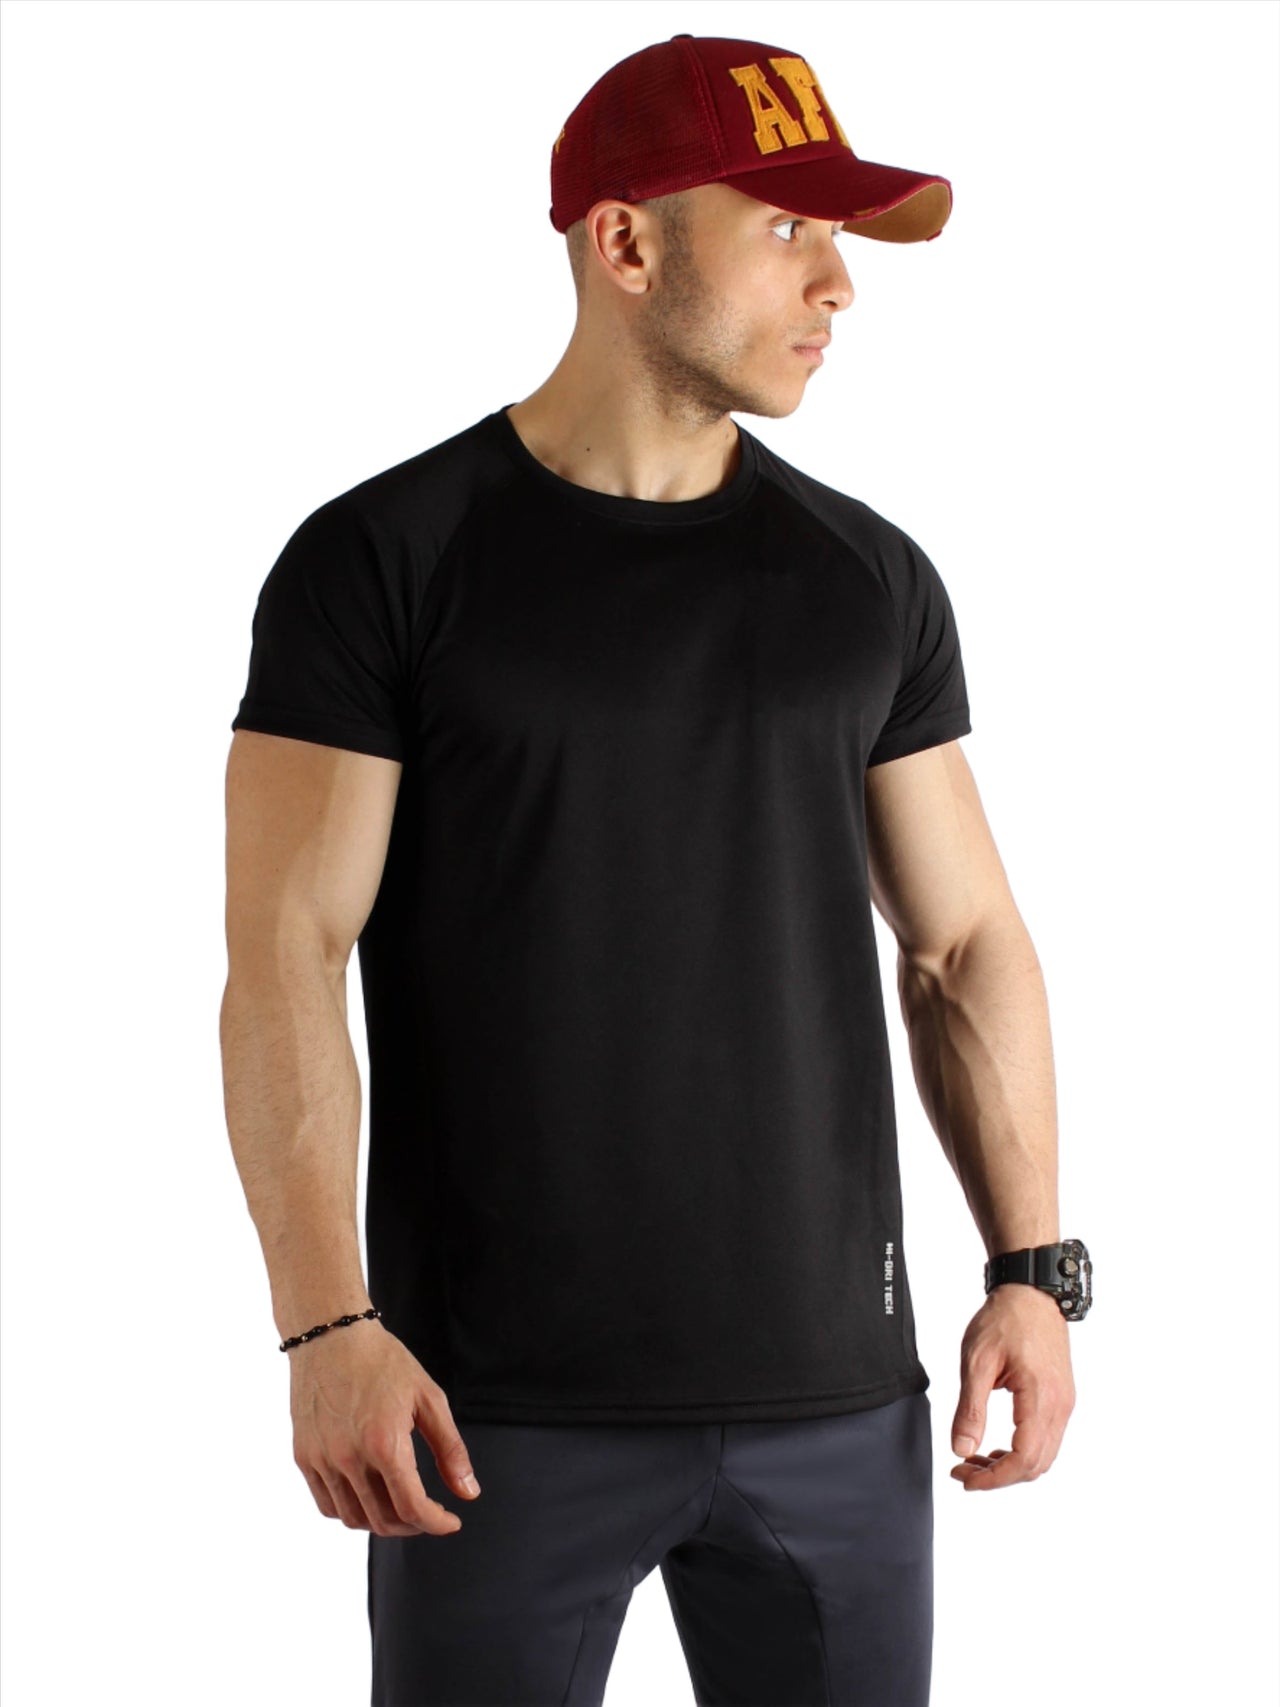 Trimark 17888 Parima Long Sleeve Tech T-Shirt